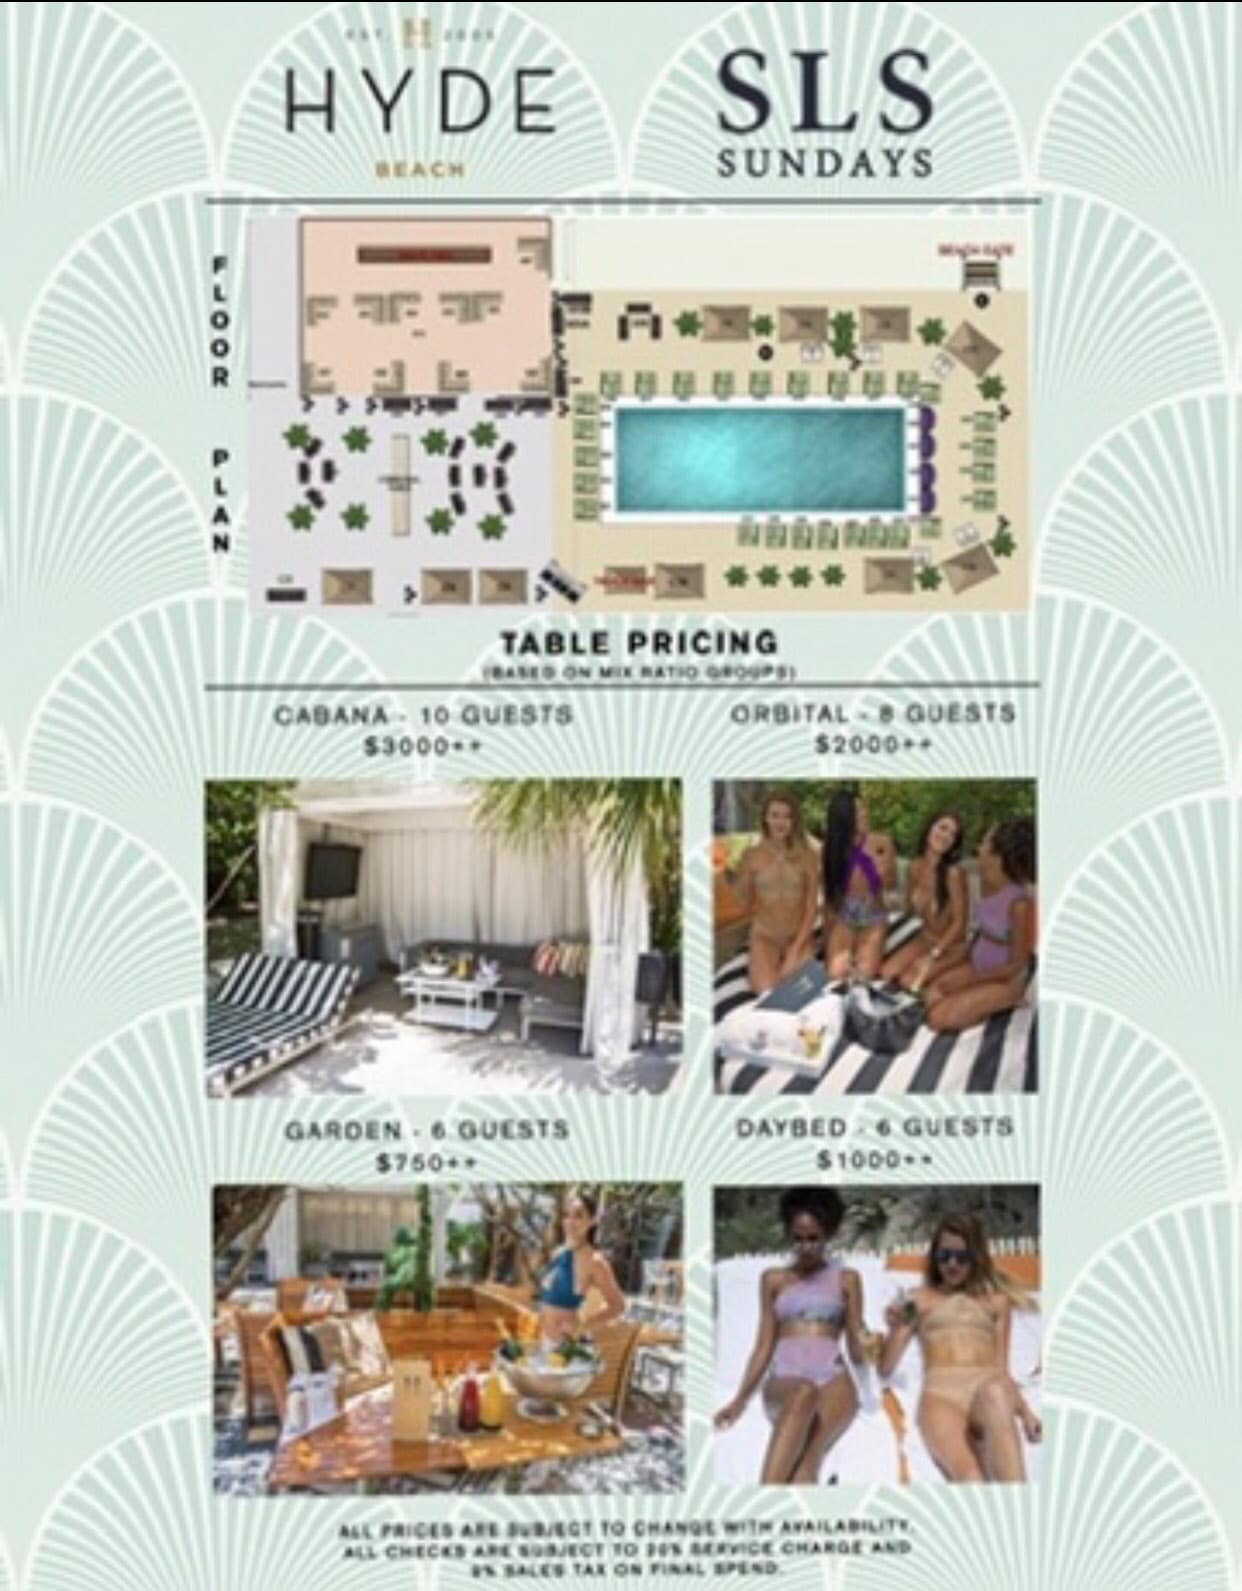 Hyde Beach Pool Party Sundays in South Beach Miami | VIP South Beach